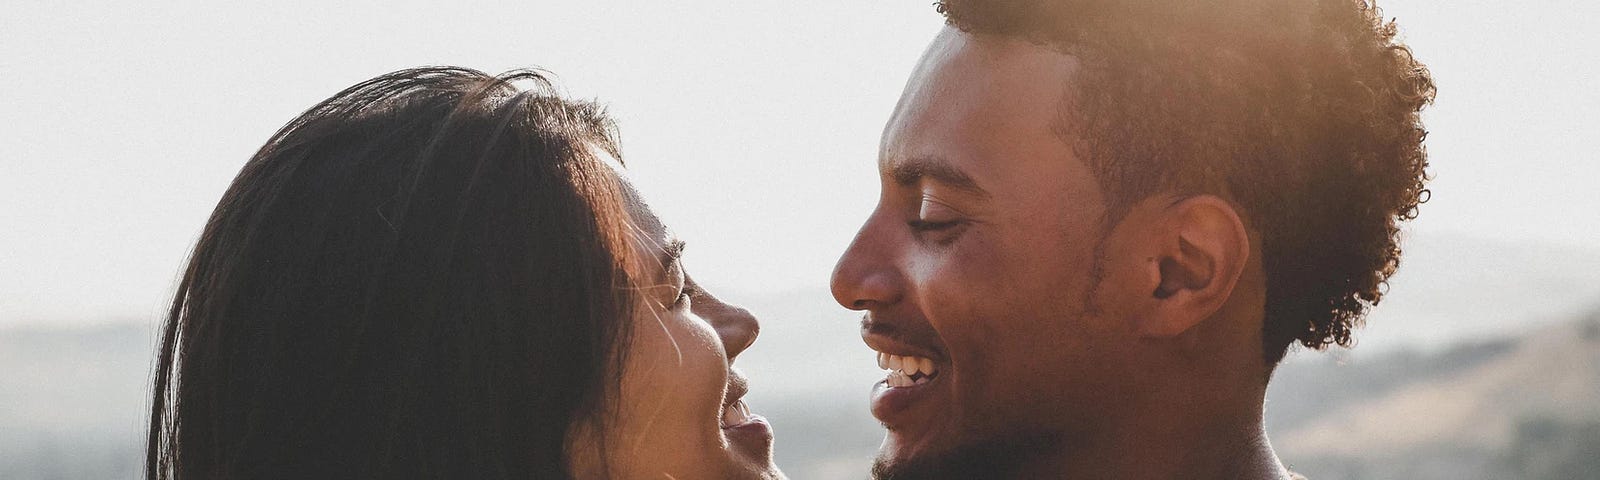 Woman facing a man and smiling